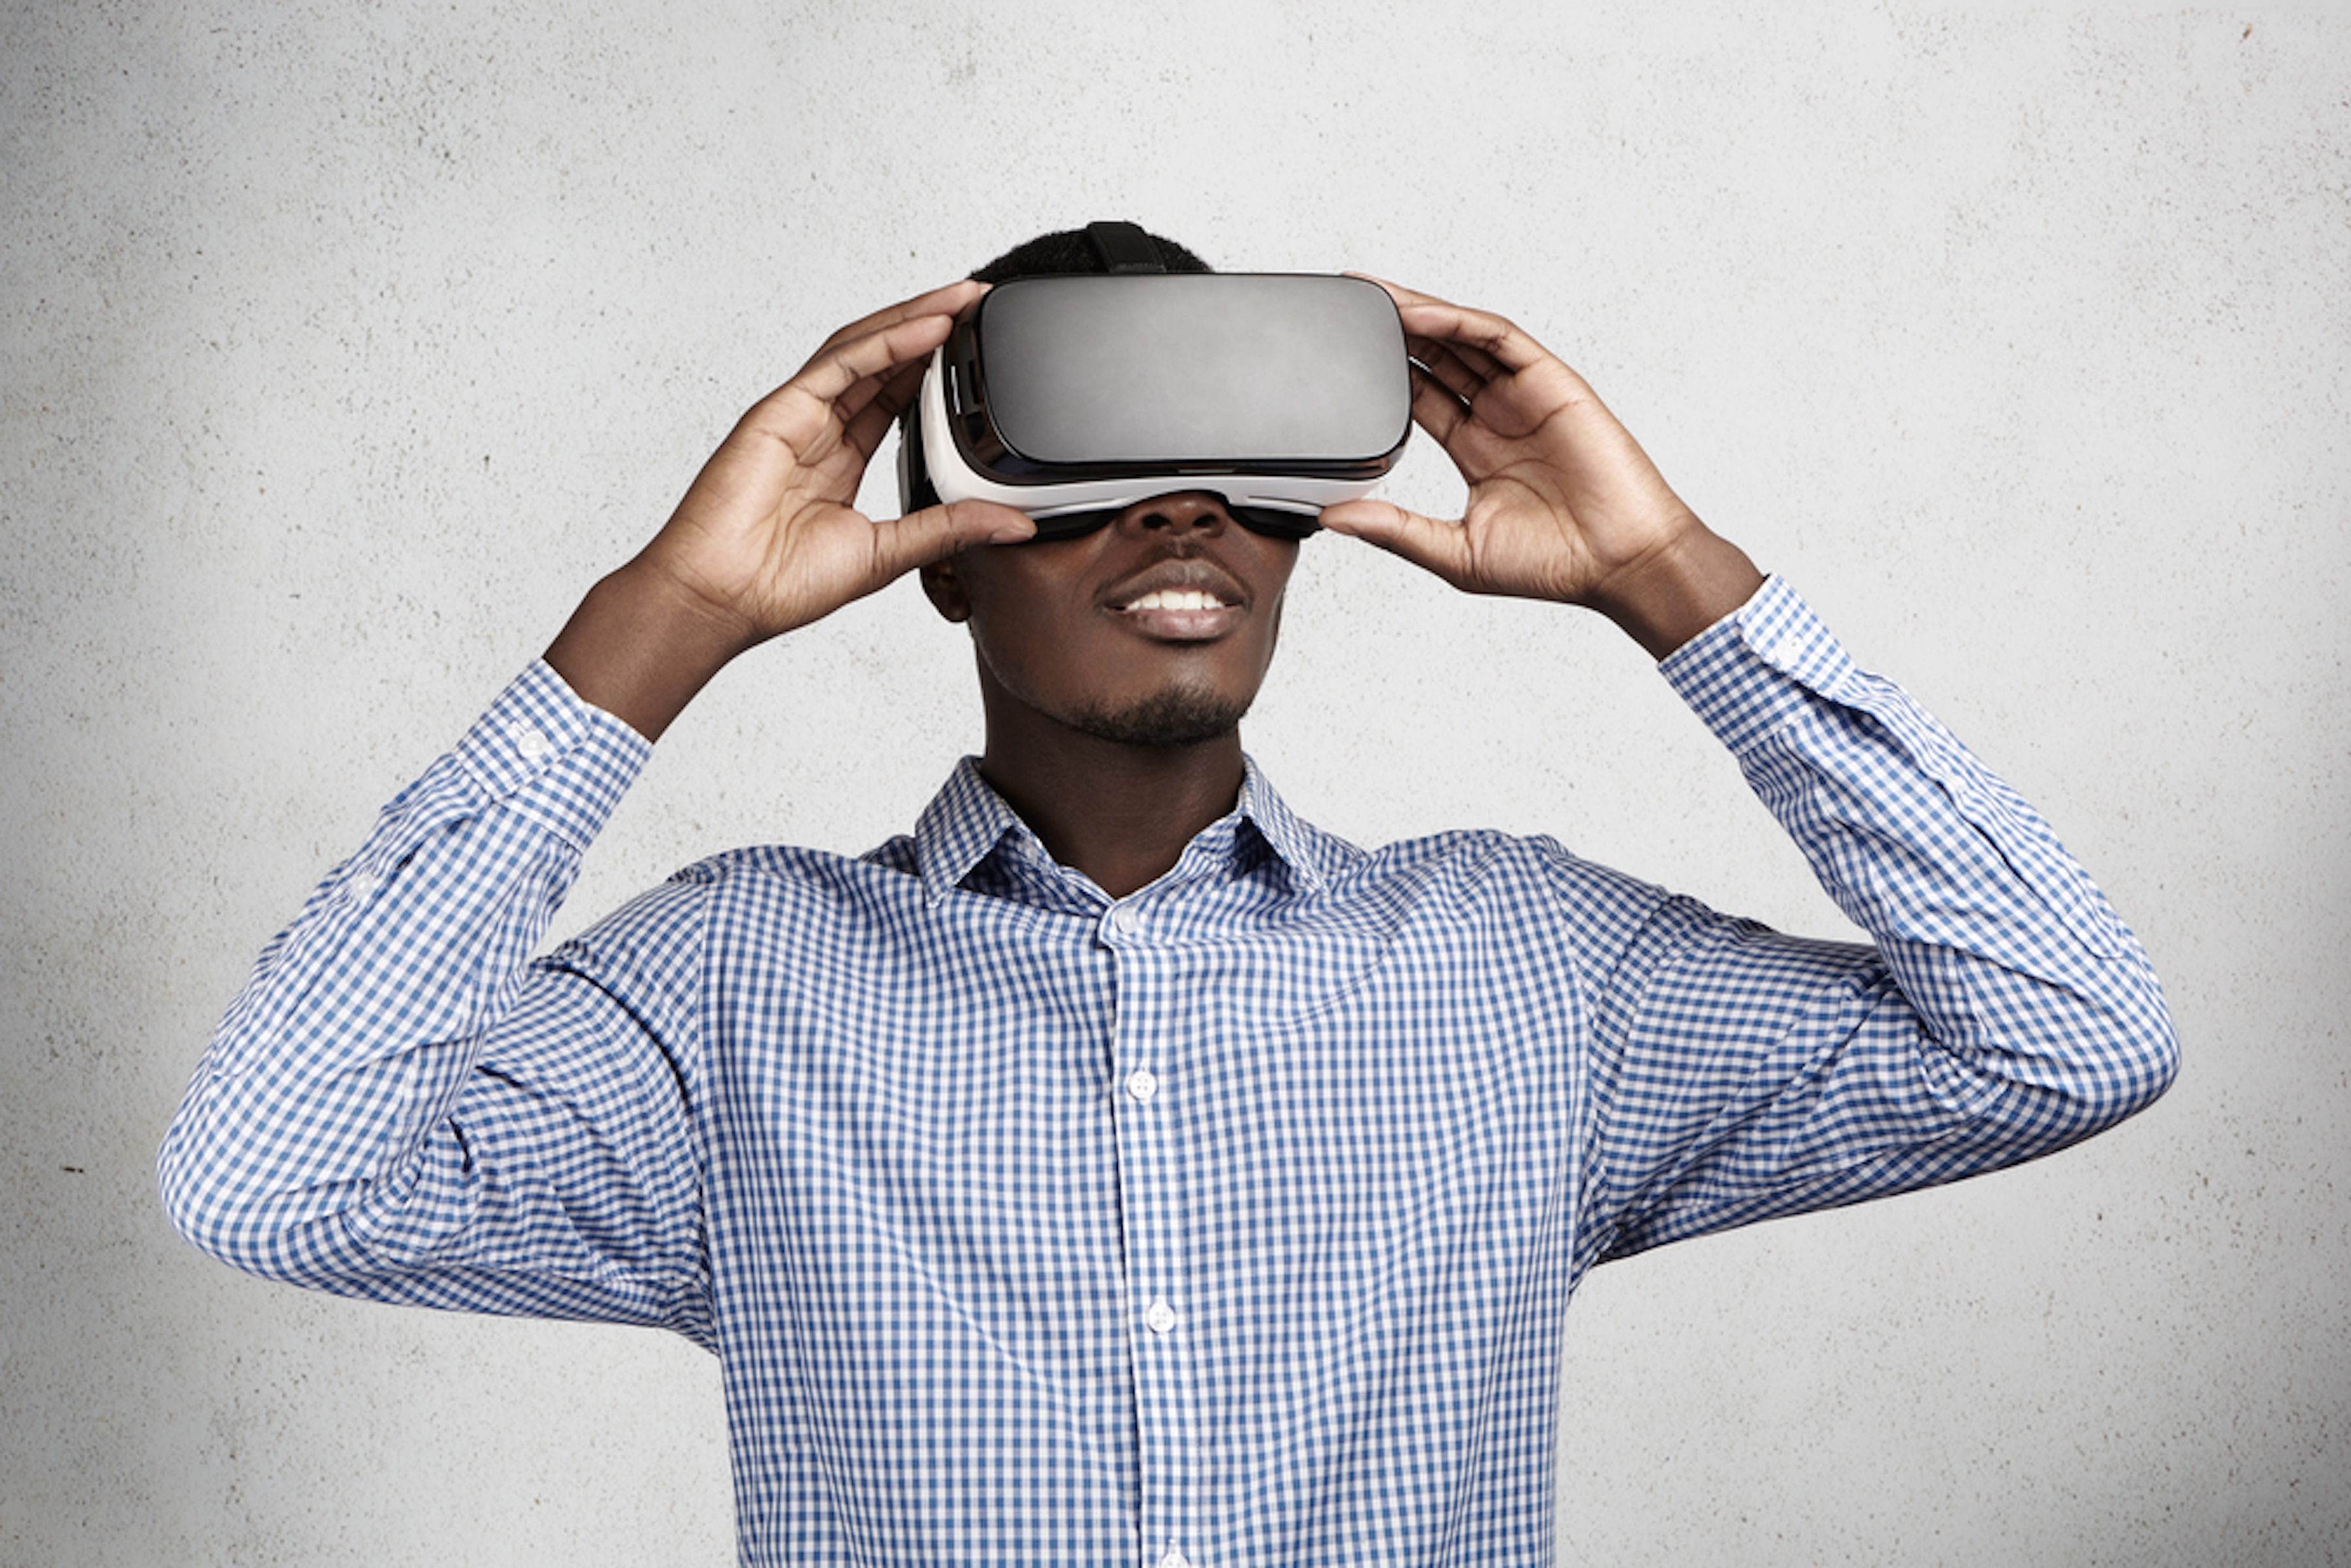 presence labs virtual reality company seattle